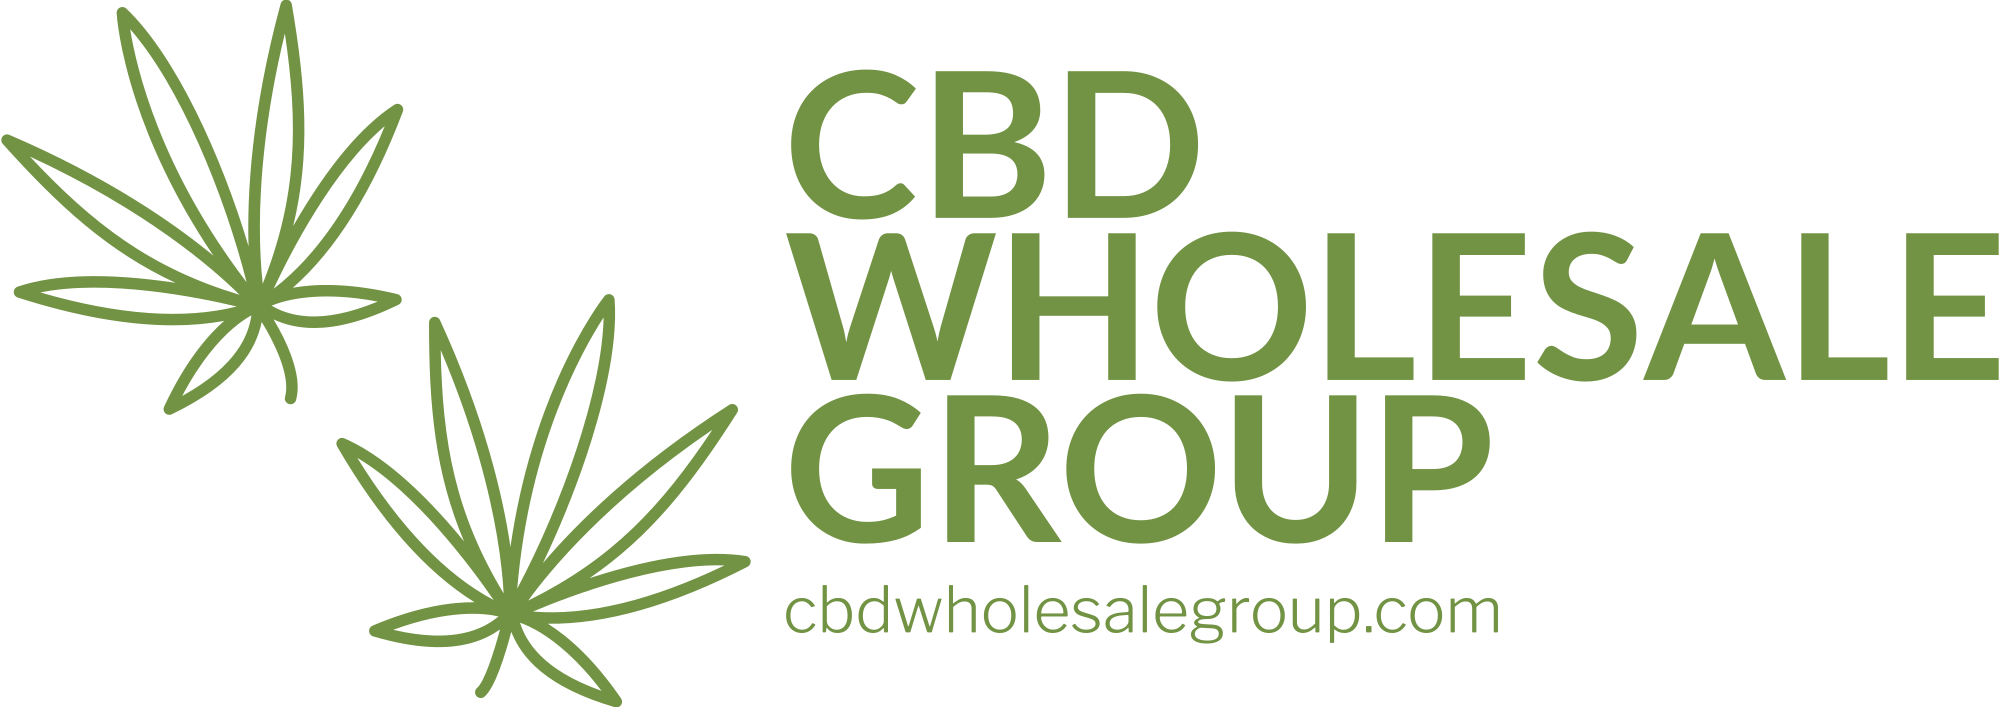 CBD Wholesale Group